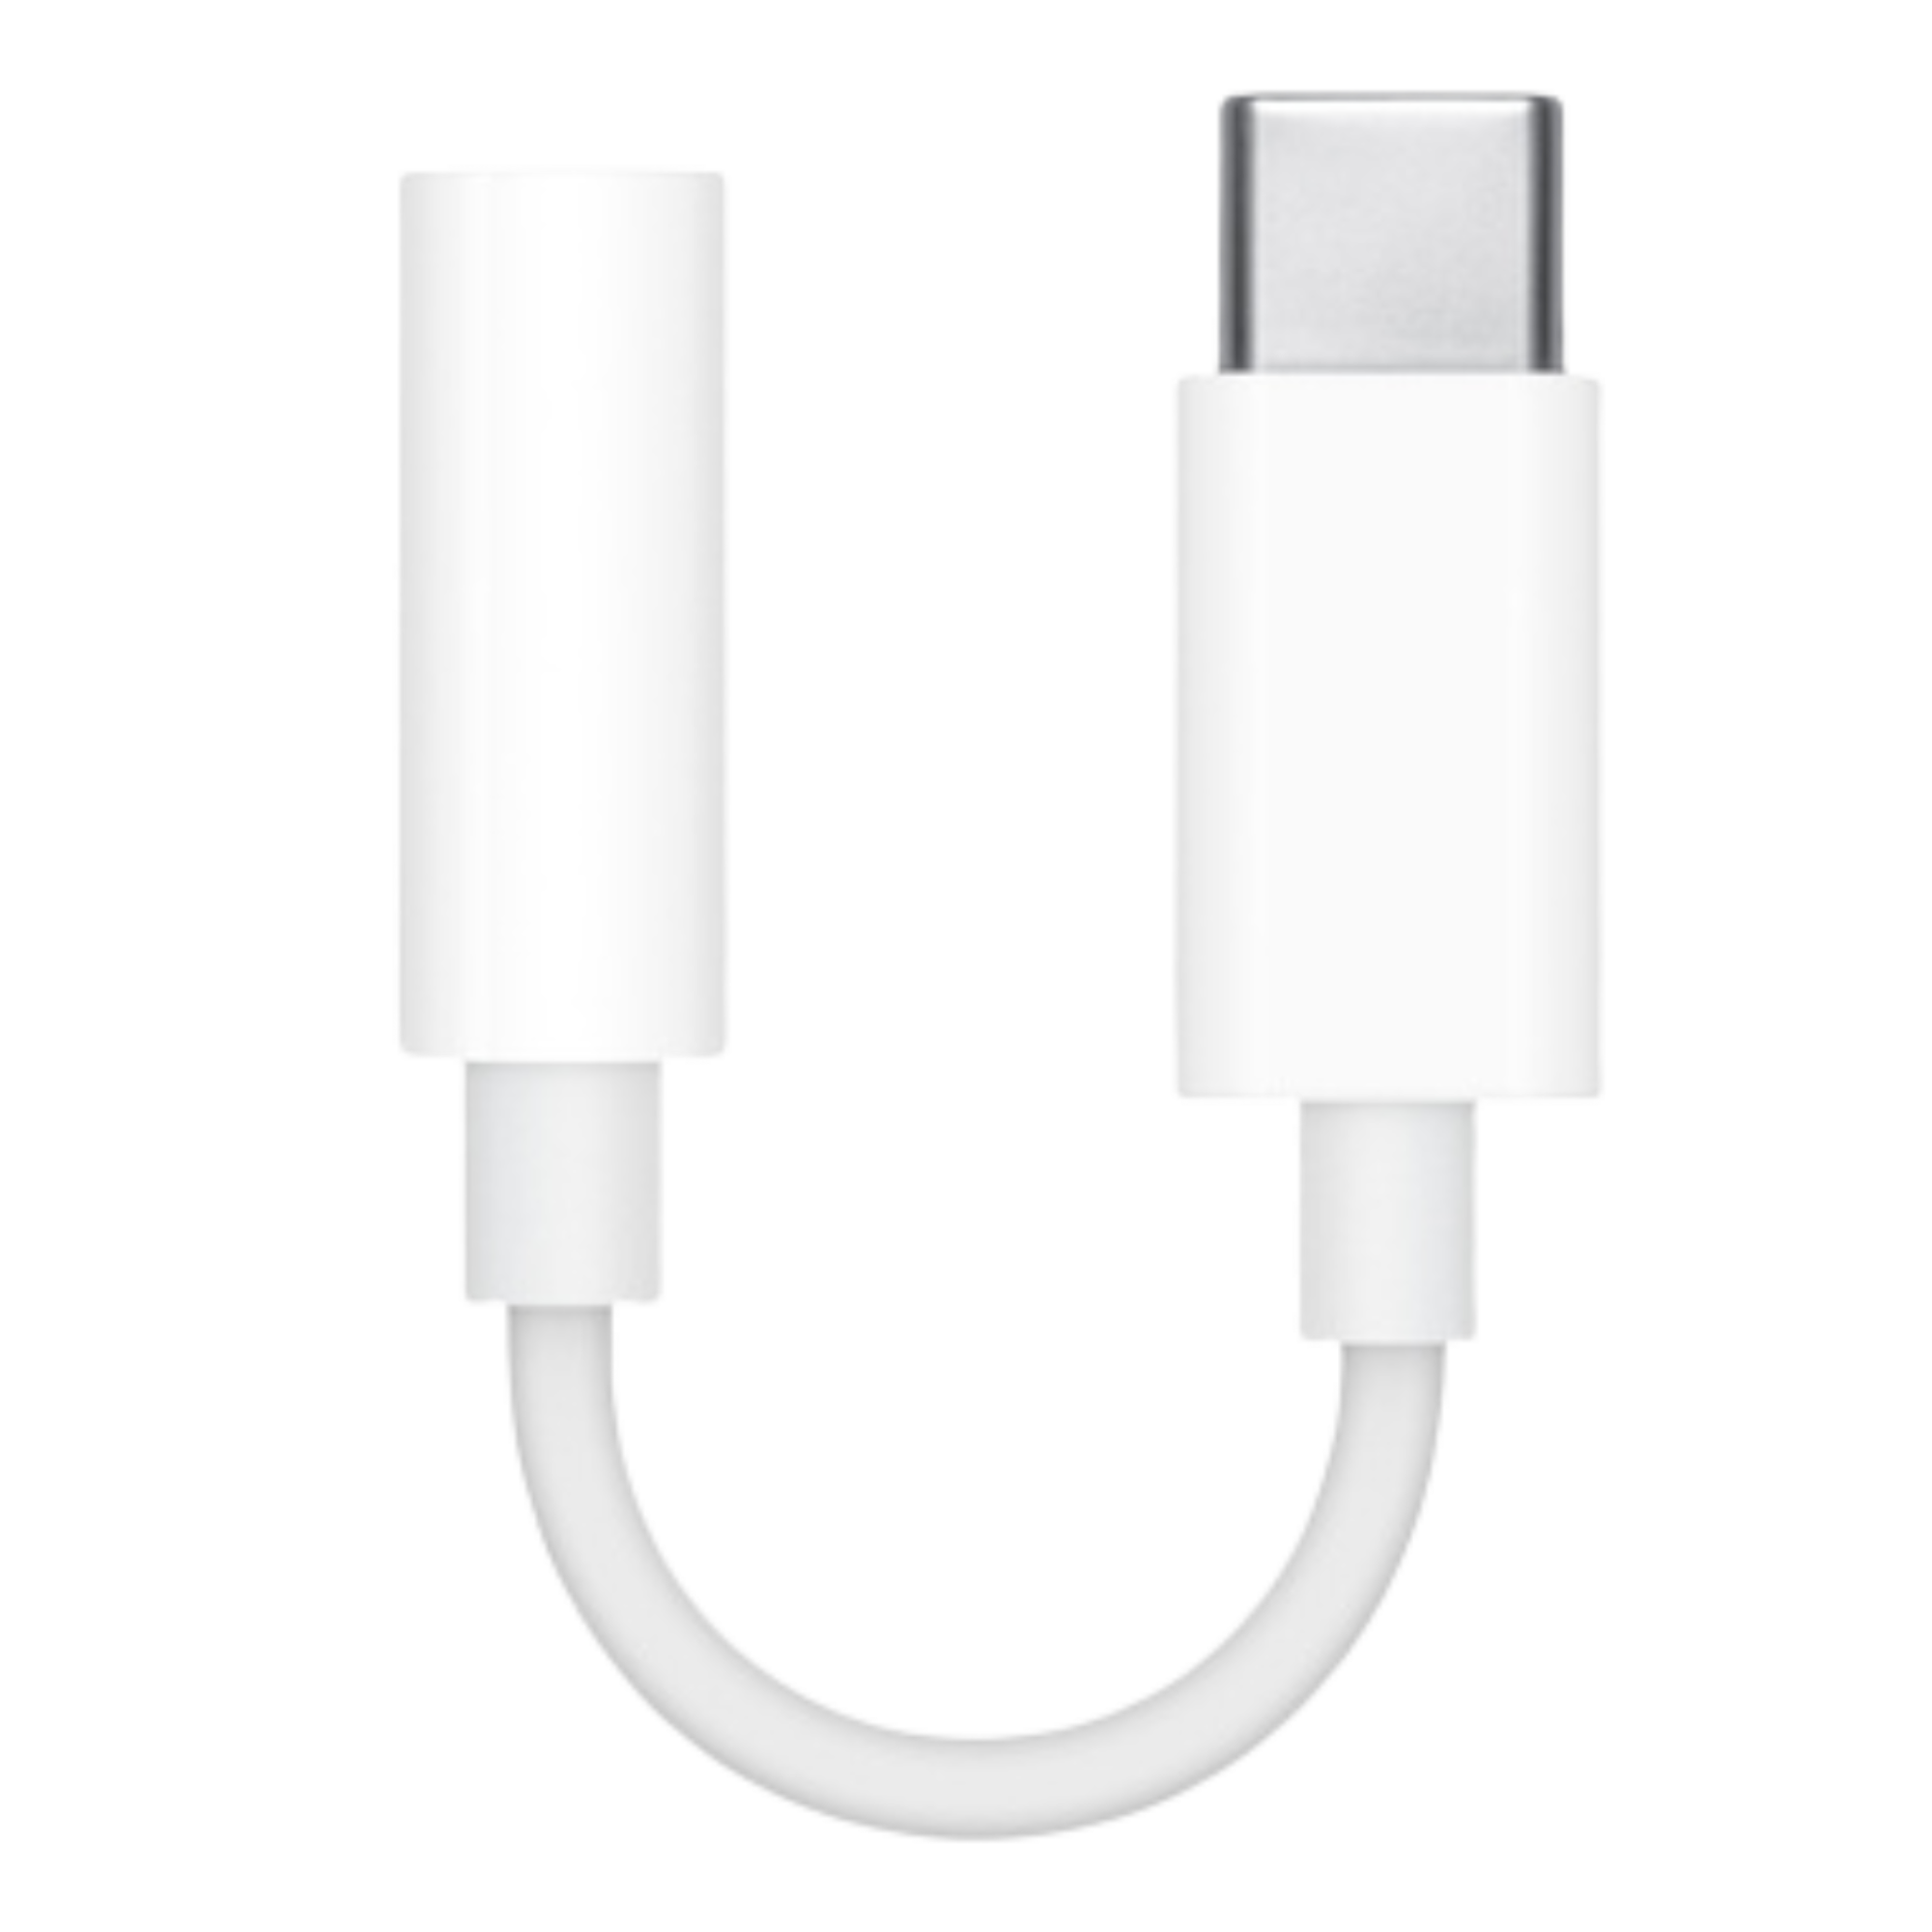 Apple USB-C to 3.5mm Headphone Jack Adapter